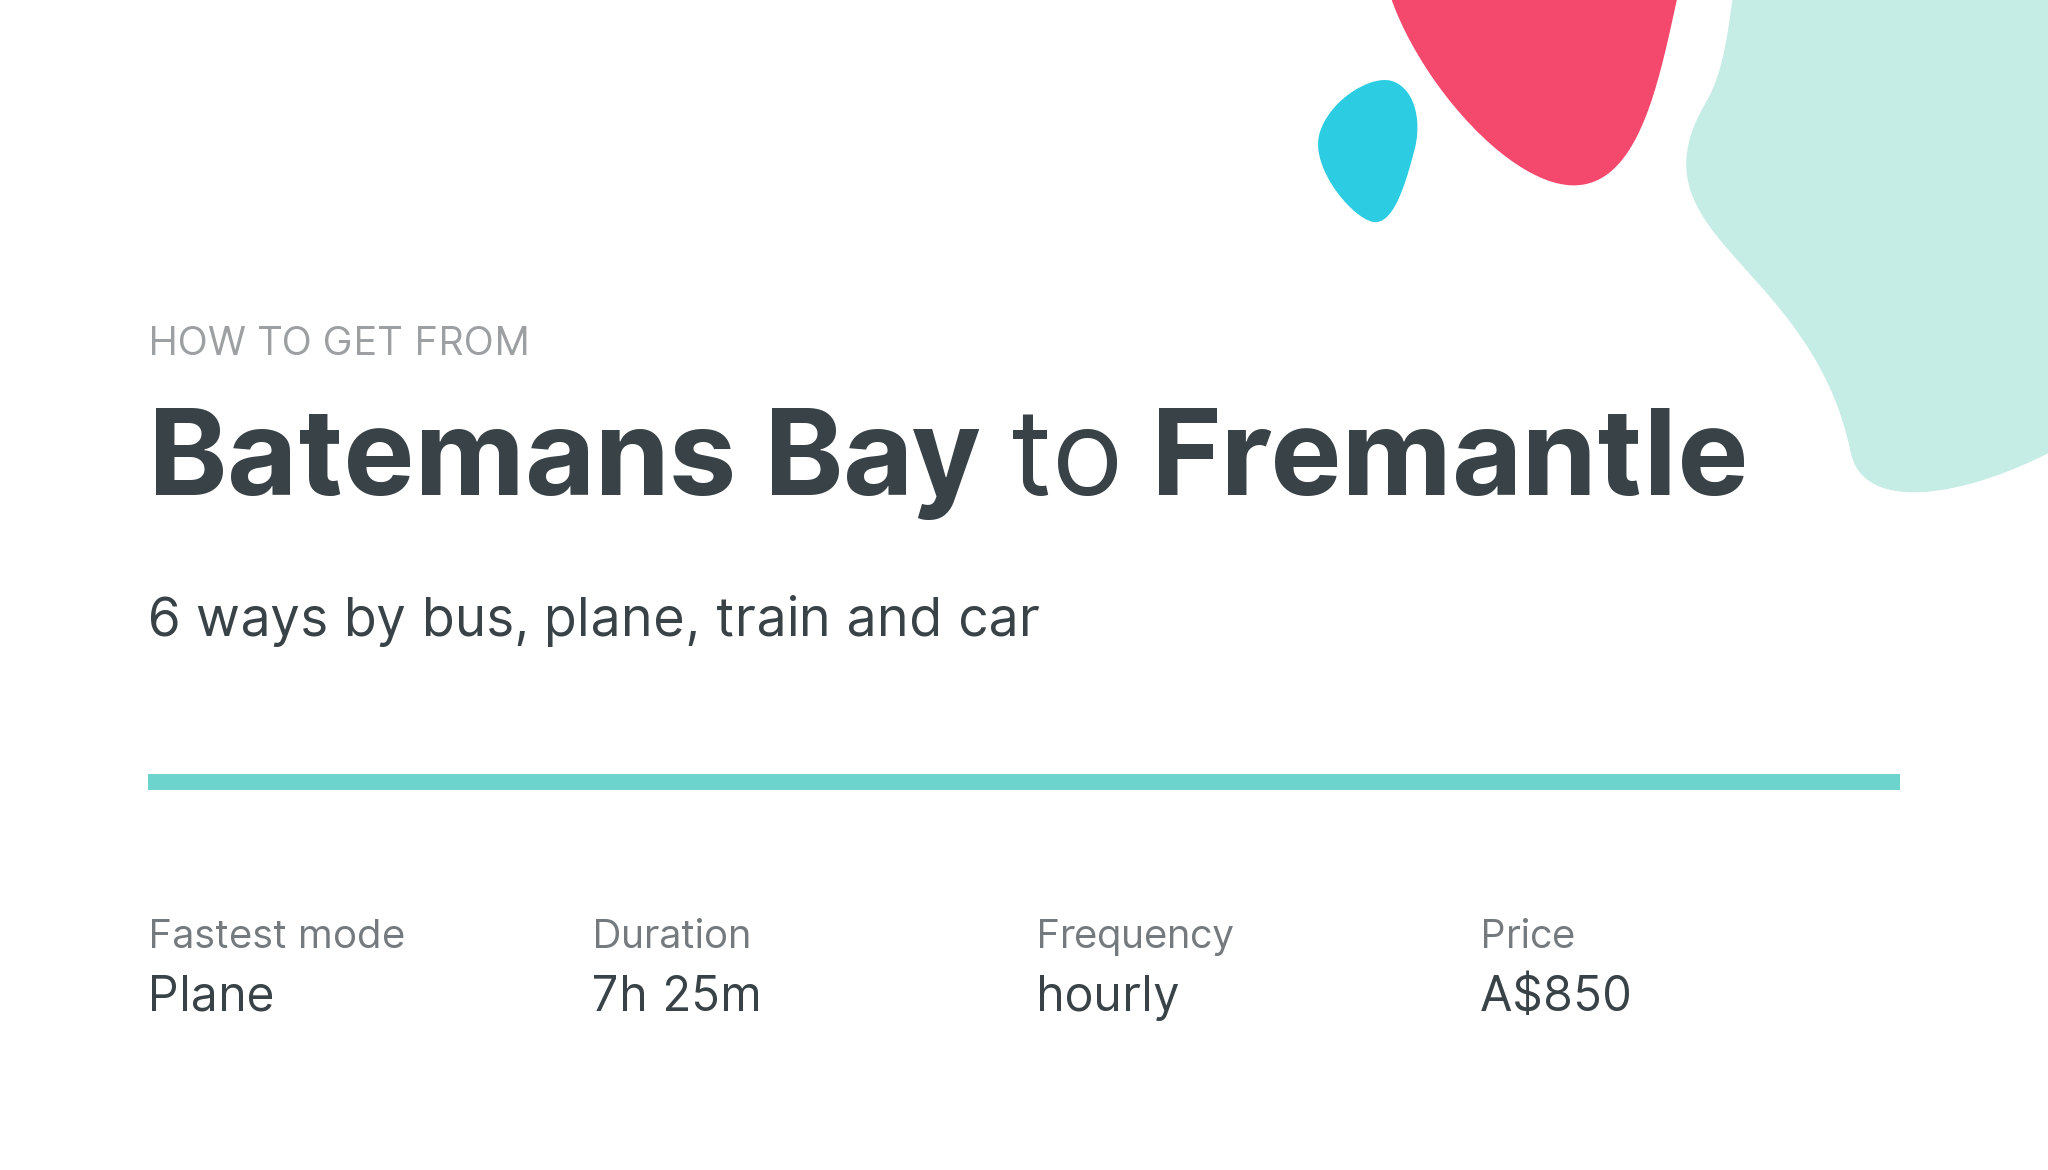 How do I get from Batemans Bay to Fremantle